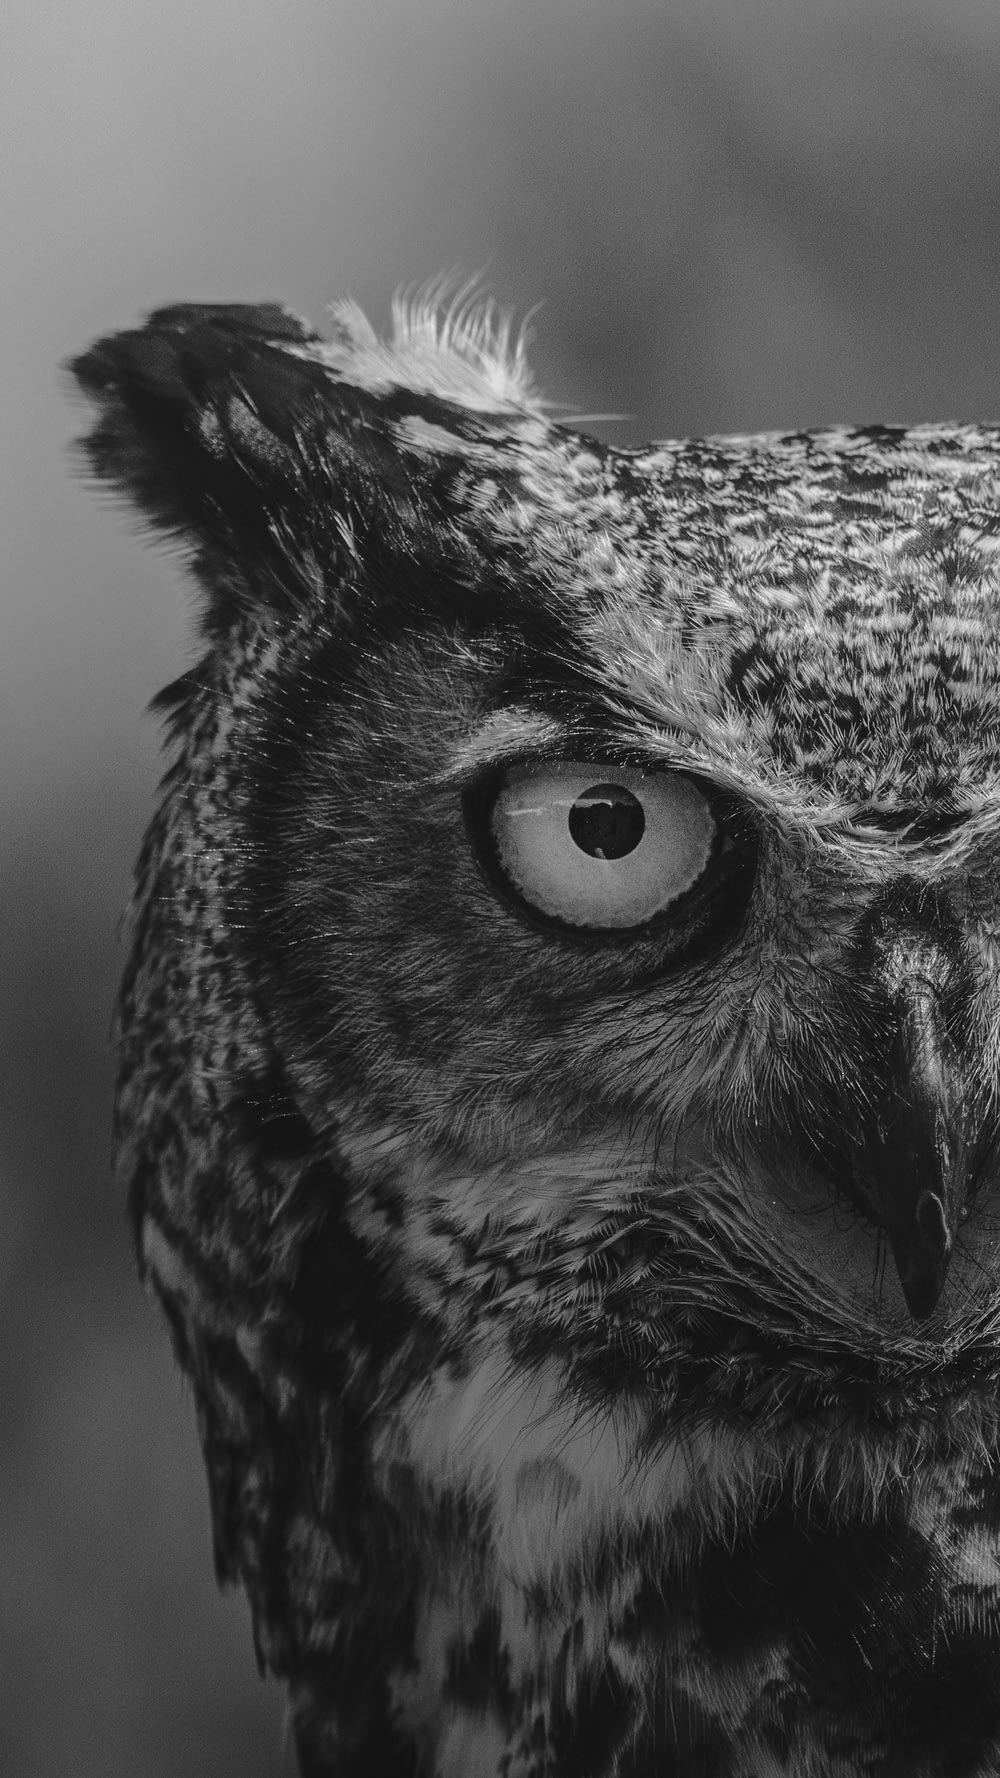 grayscale photo of owl head